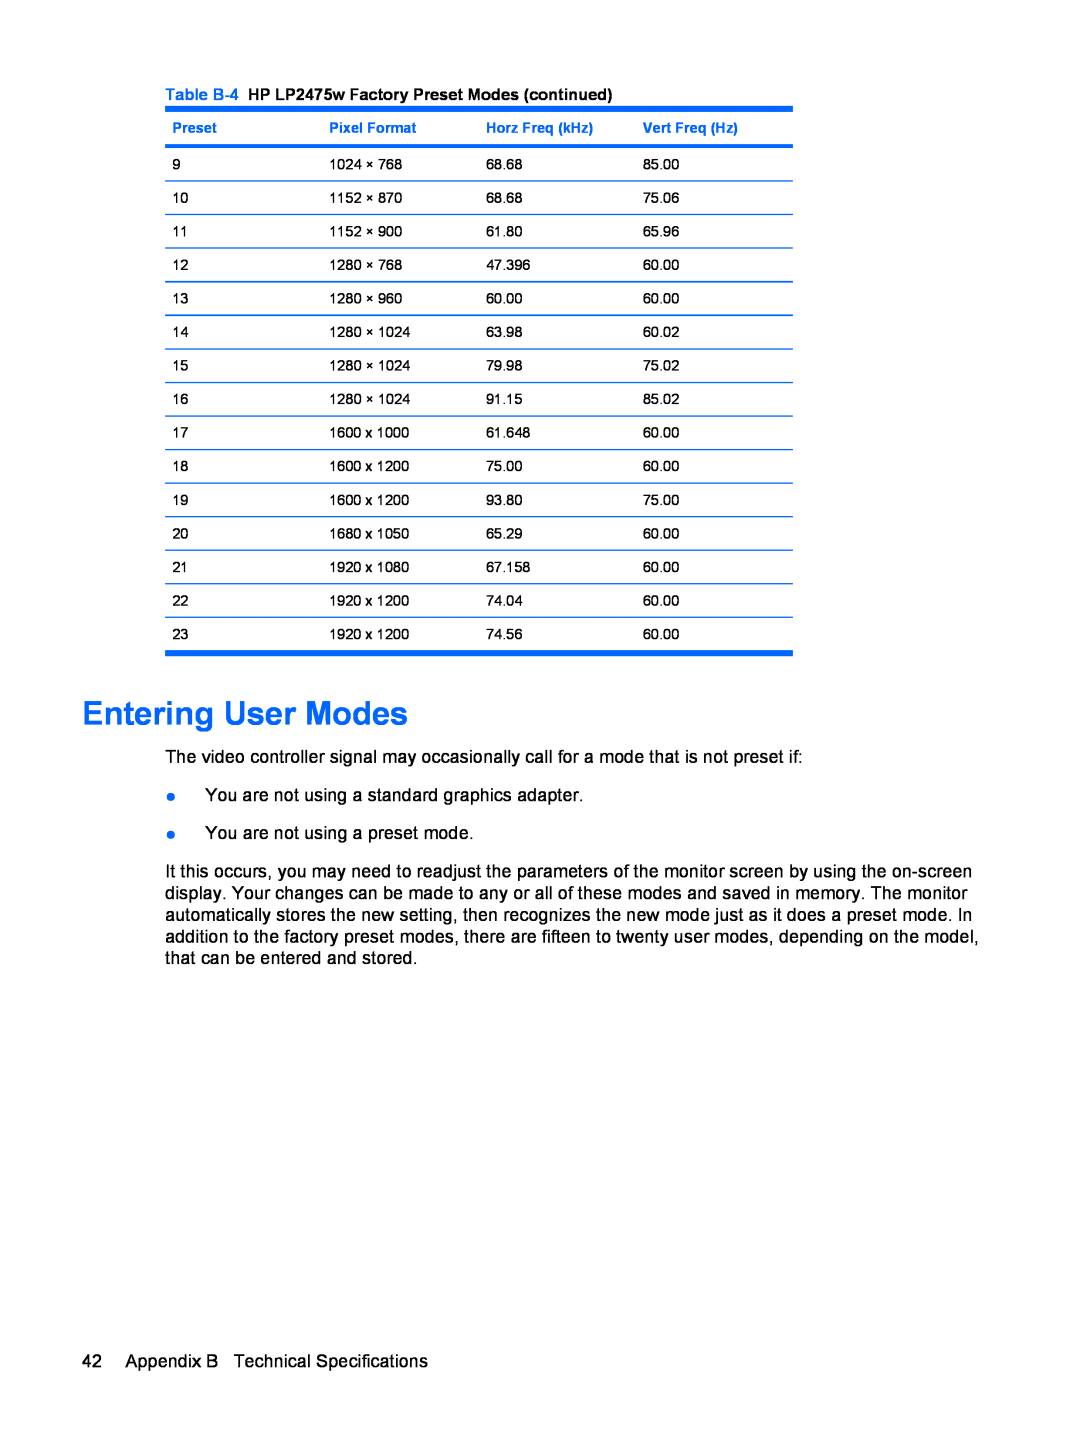 HP LP2275w manual Entering User Modes 